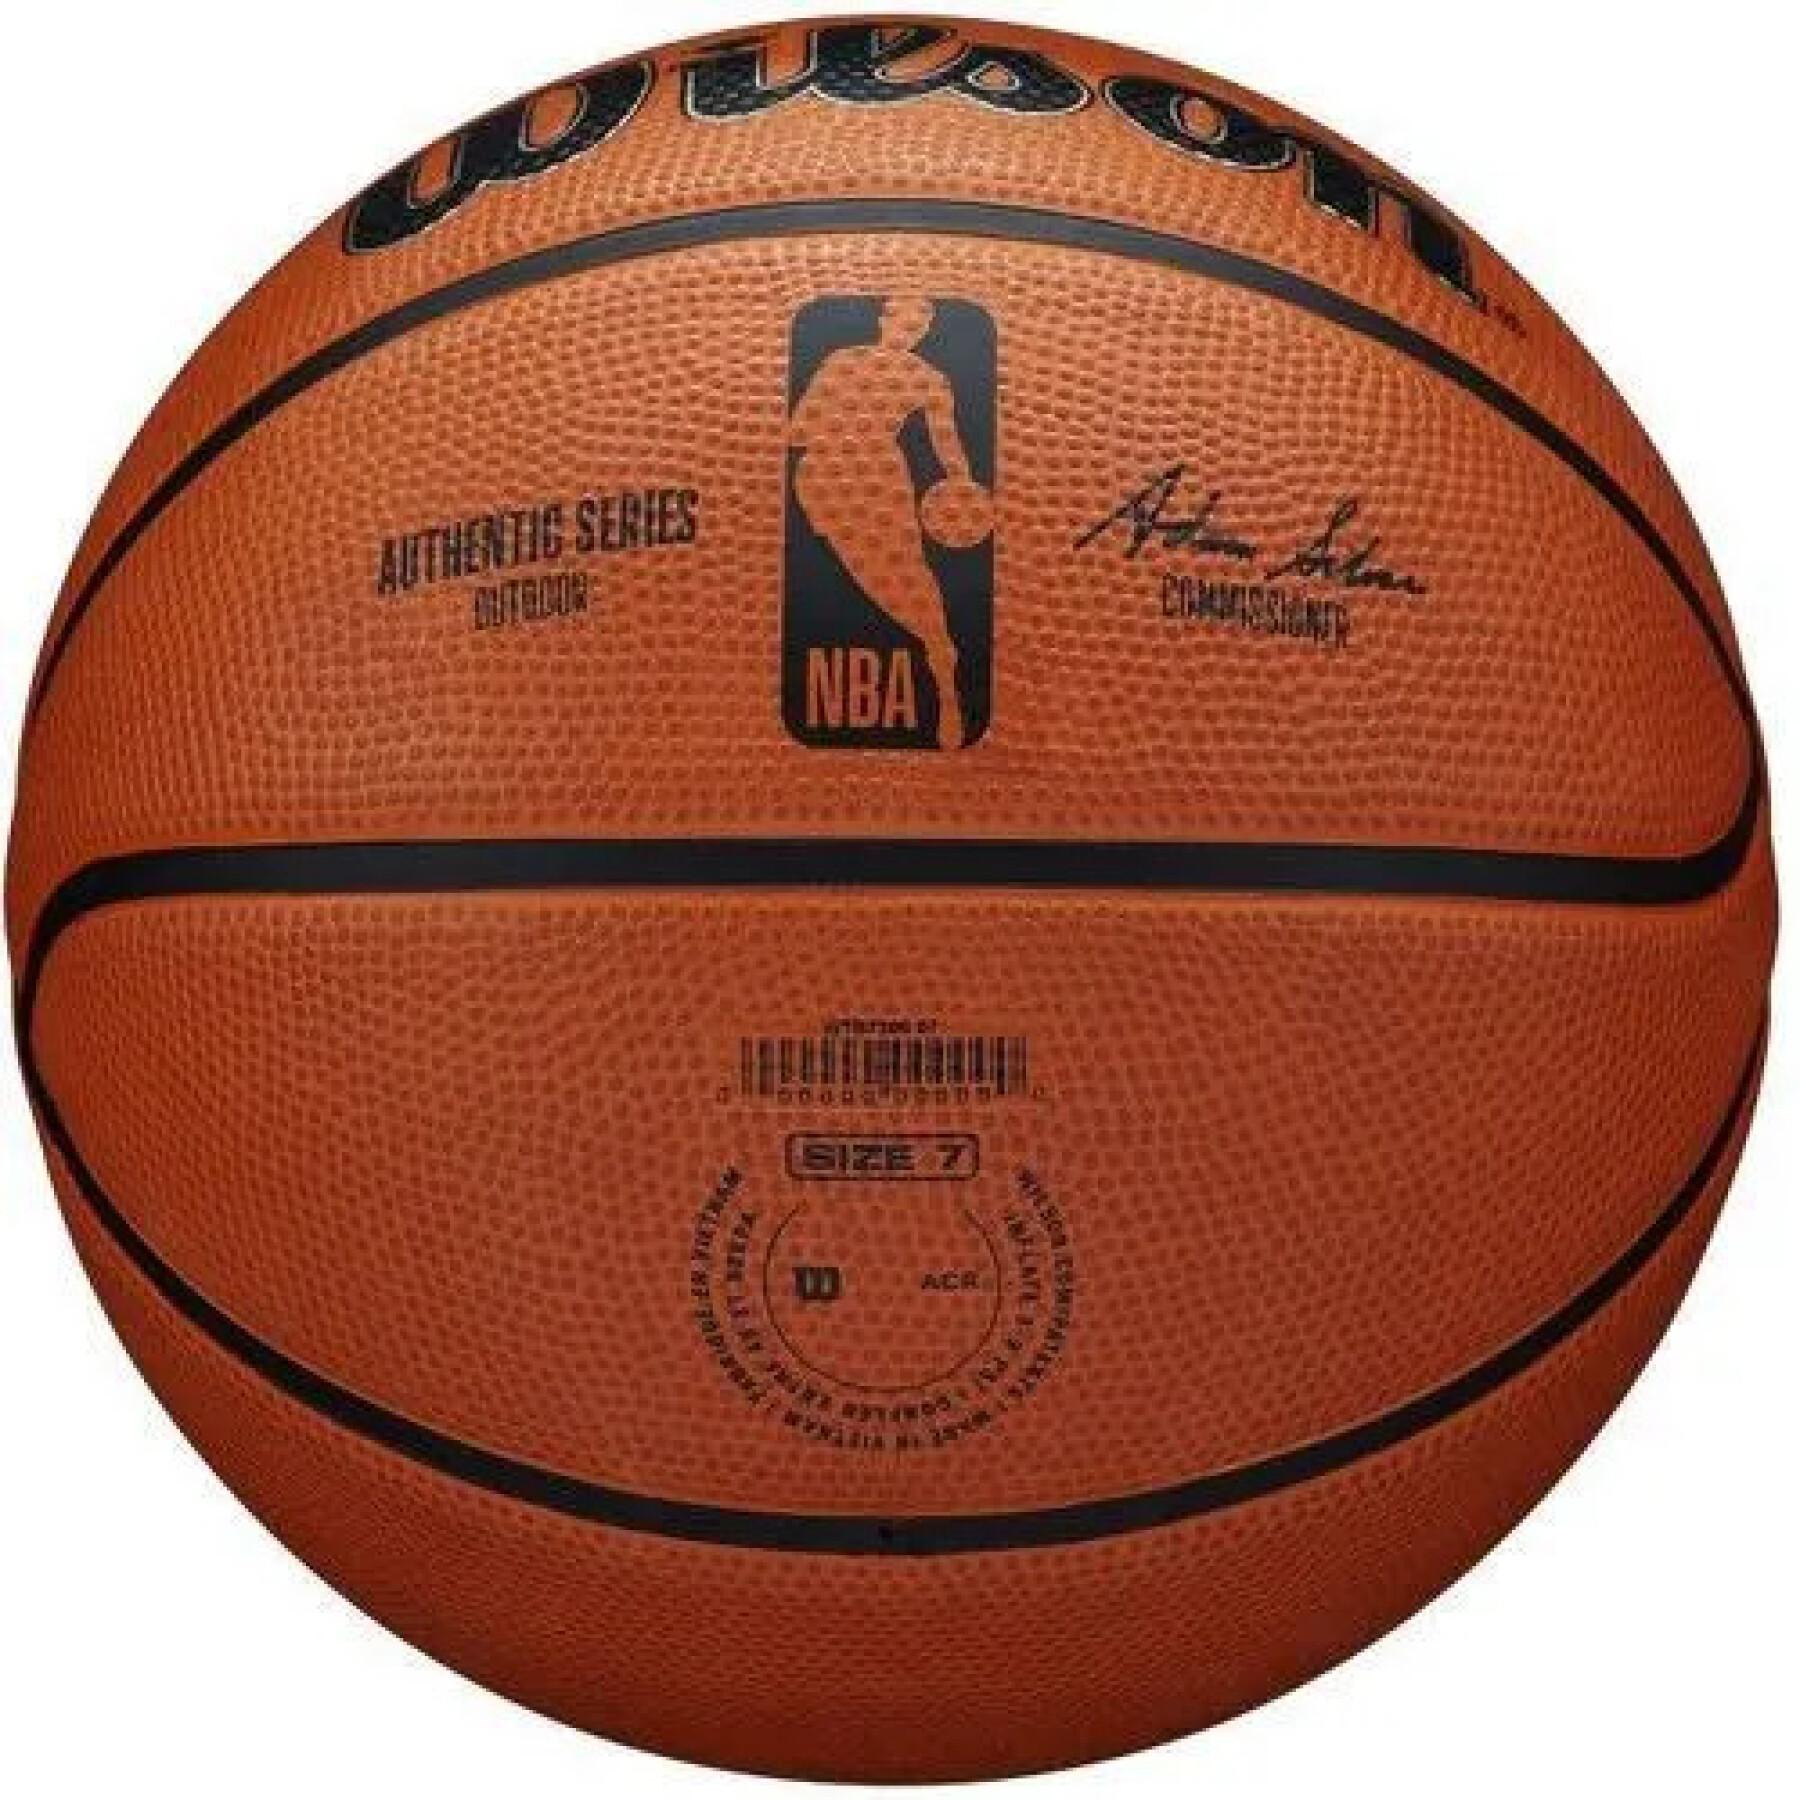 Piłka do koszykówki NBA Authentic Series Outdoor